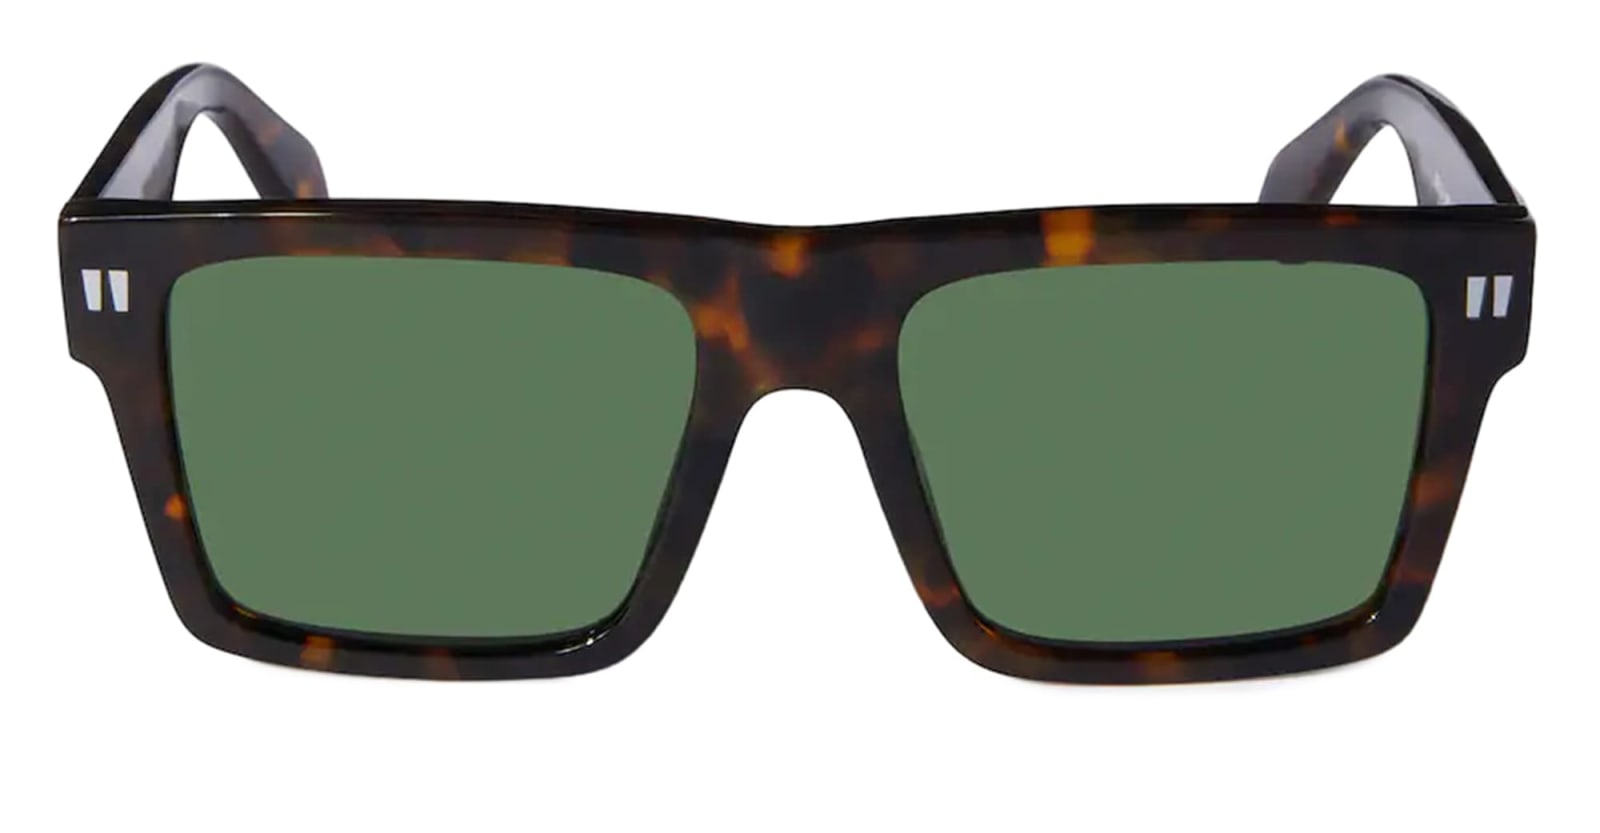 Shop Off-white Lawton - Havana / Green Sunglasses